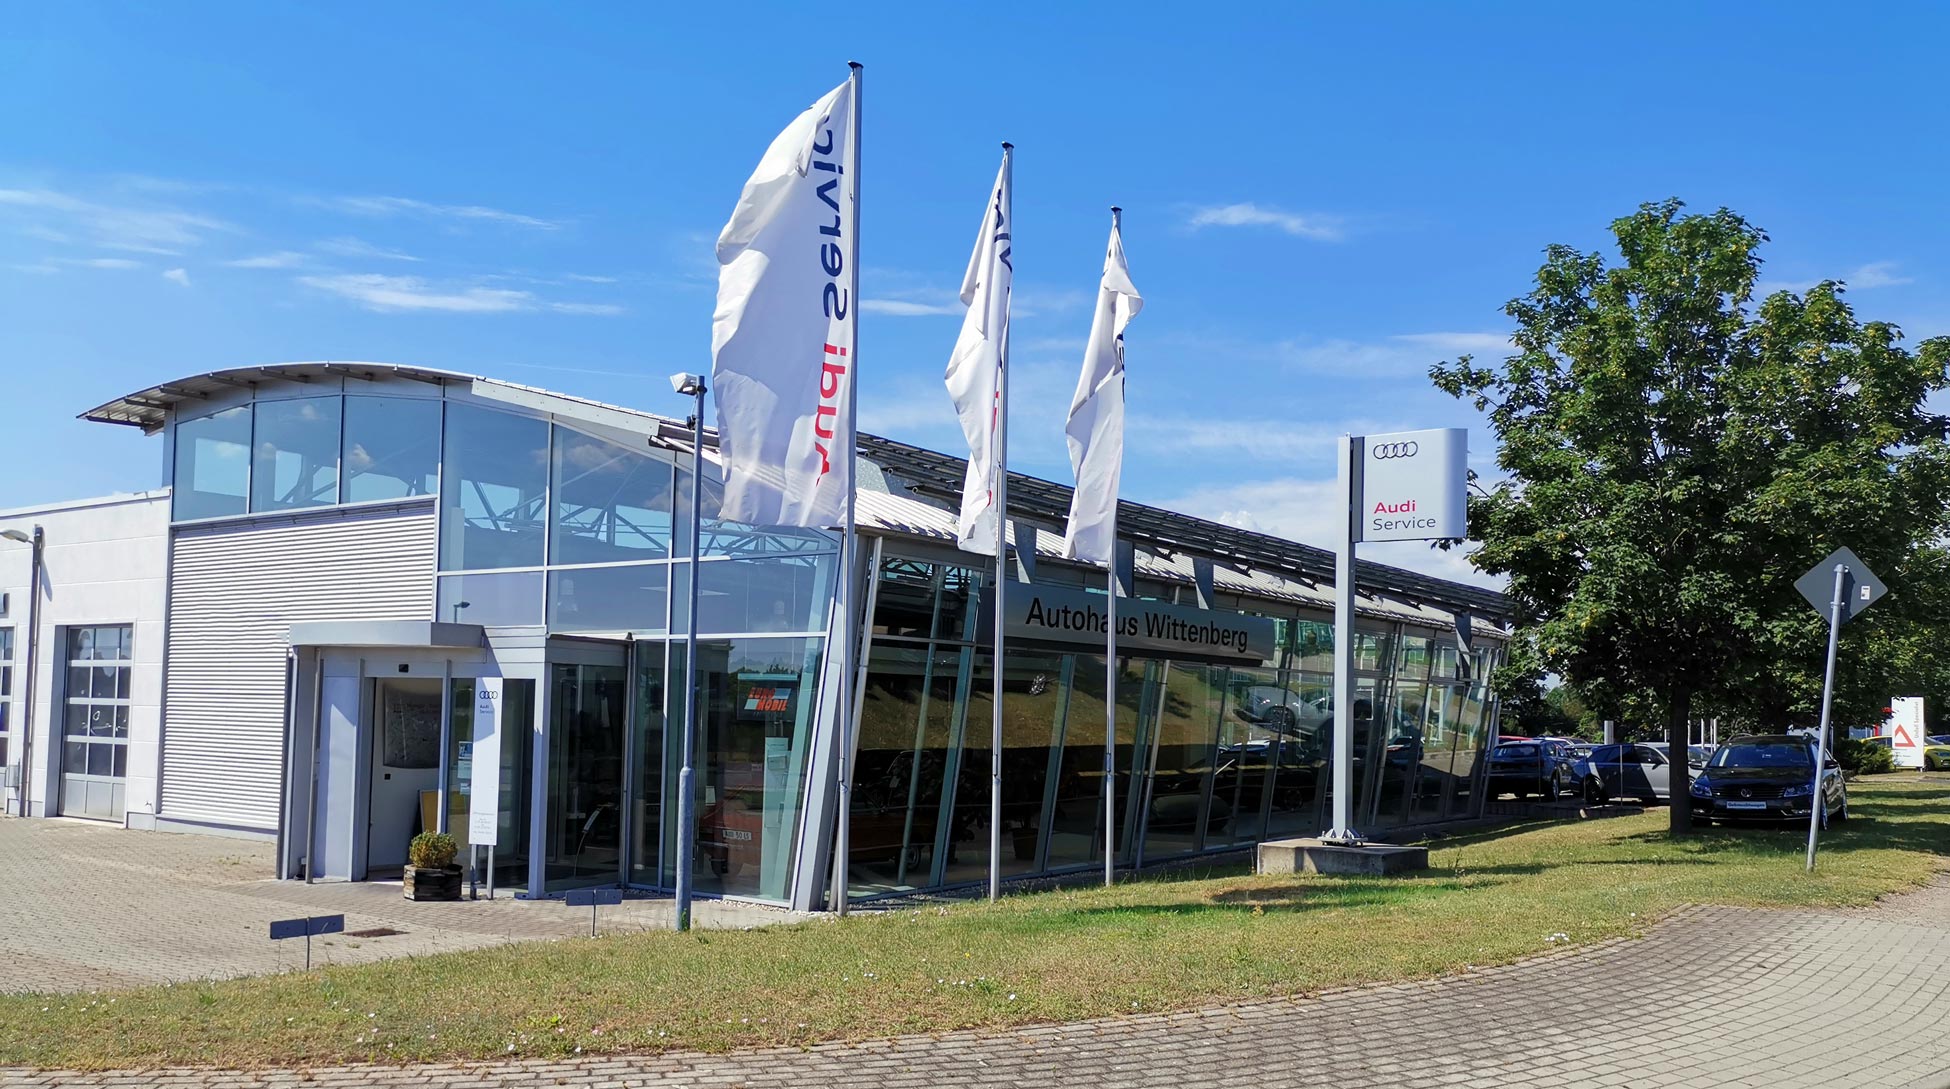 Audi Service Partner Autohaus Wittenberg